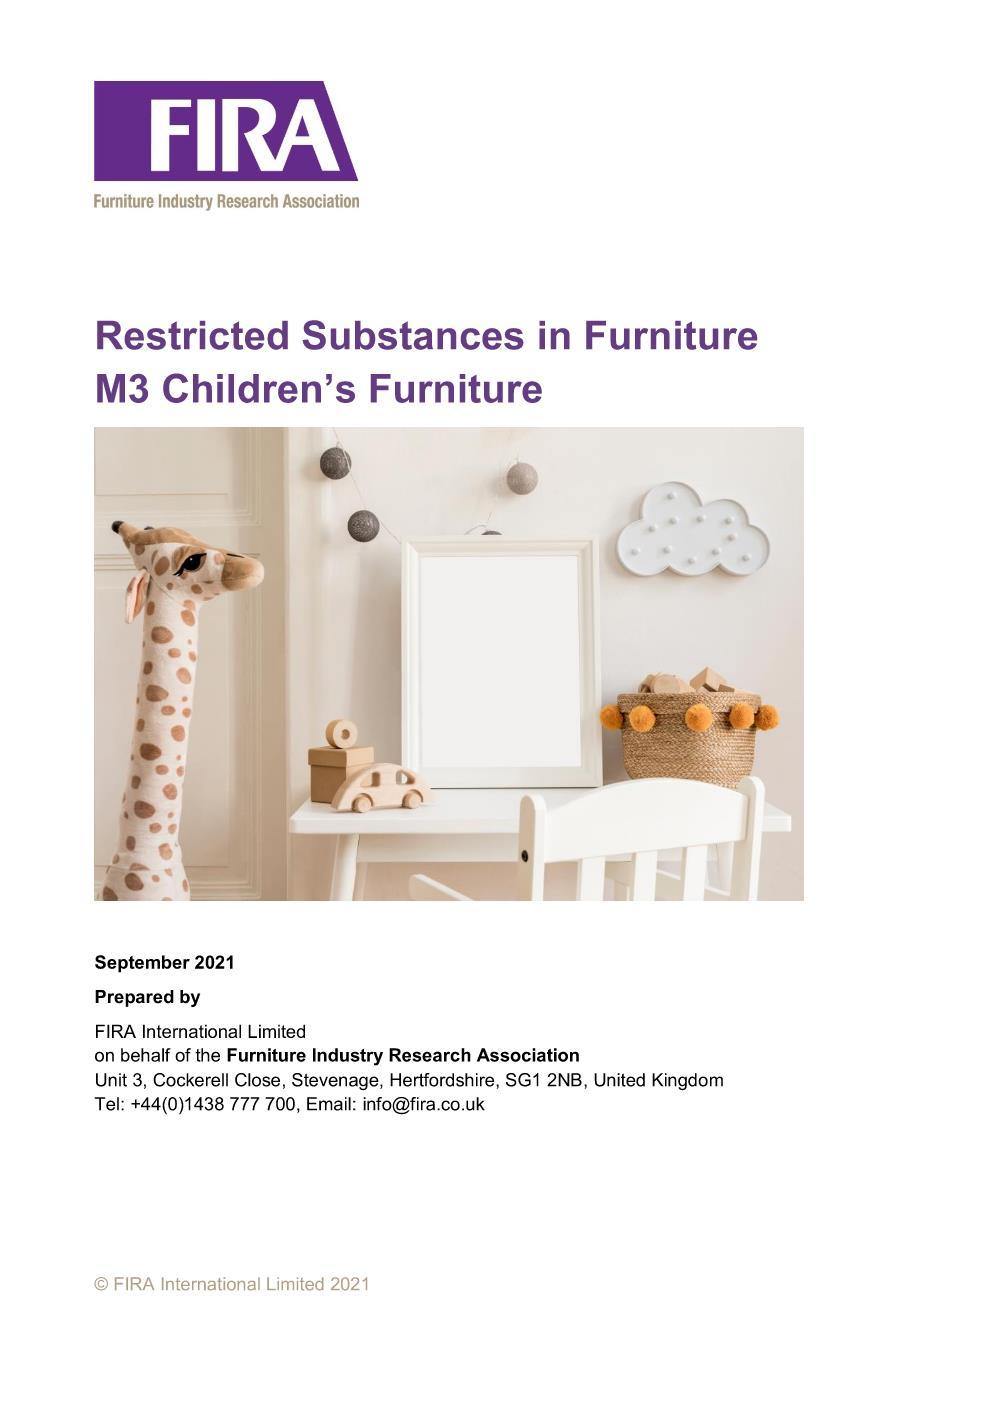 REACH: Restricted Substances in Furniture - M3 Children's Furniture